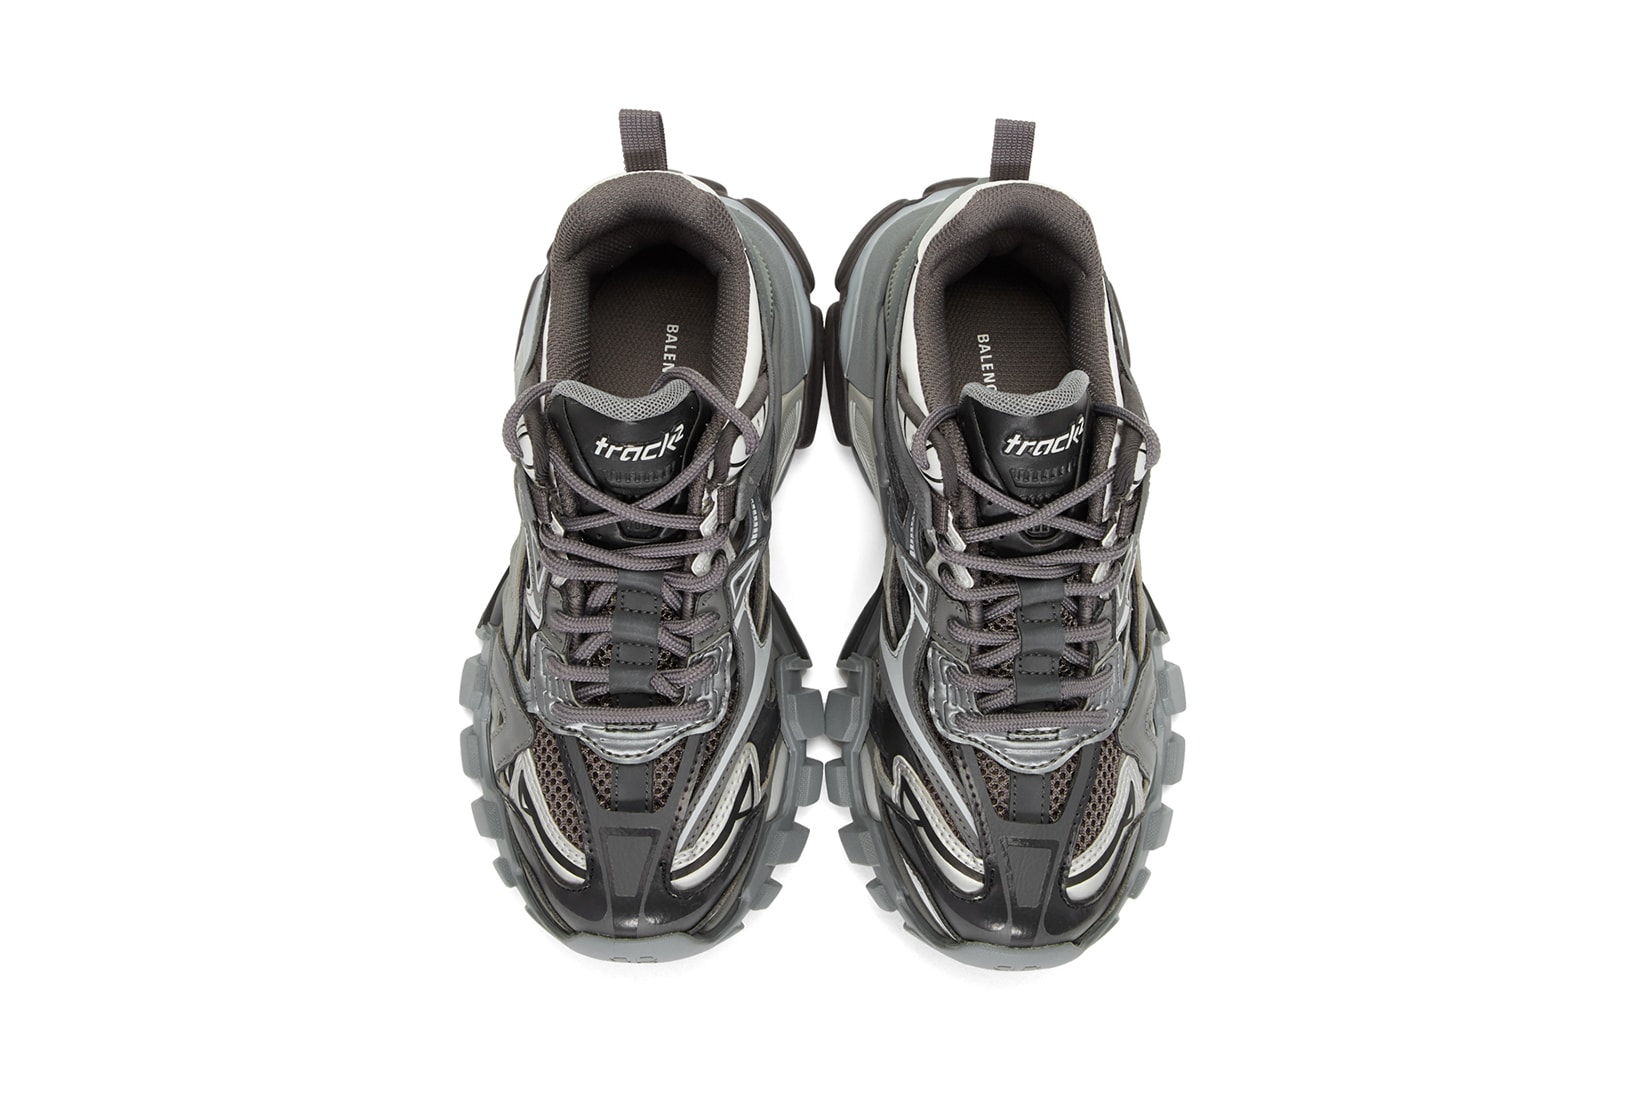 Balenciaga's Track.2 Sneakers a Grey Colorway | Hypebae